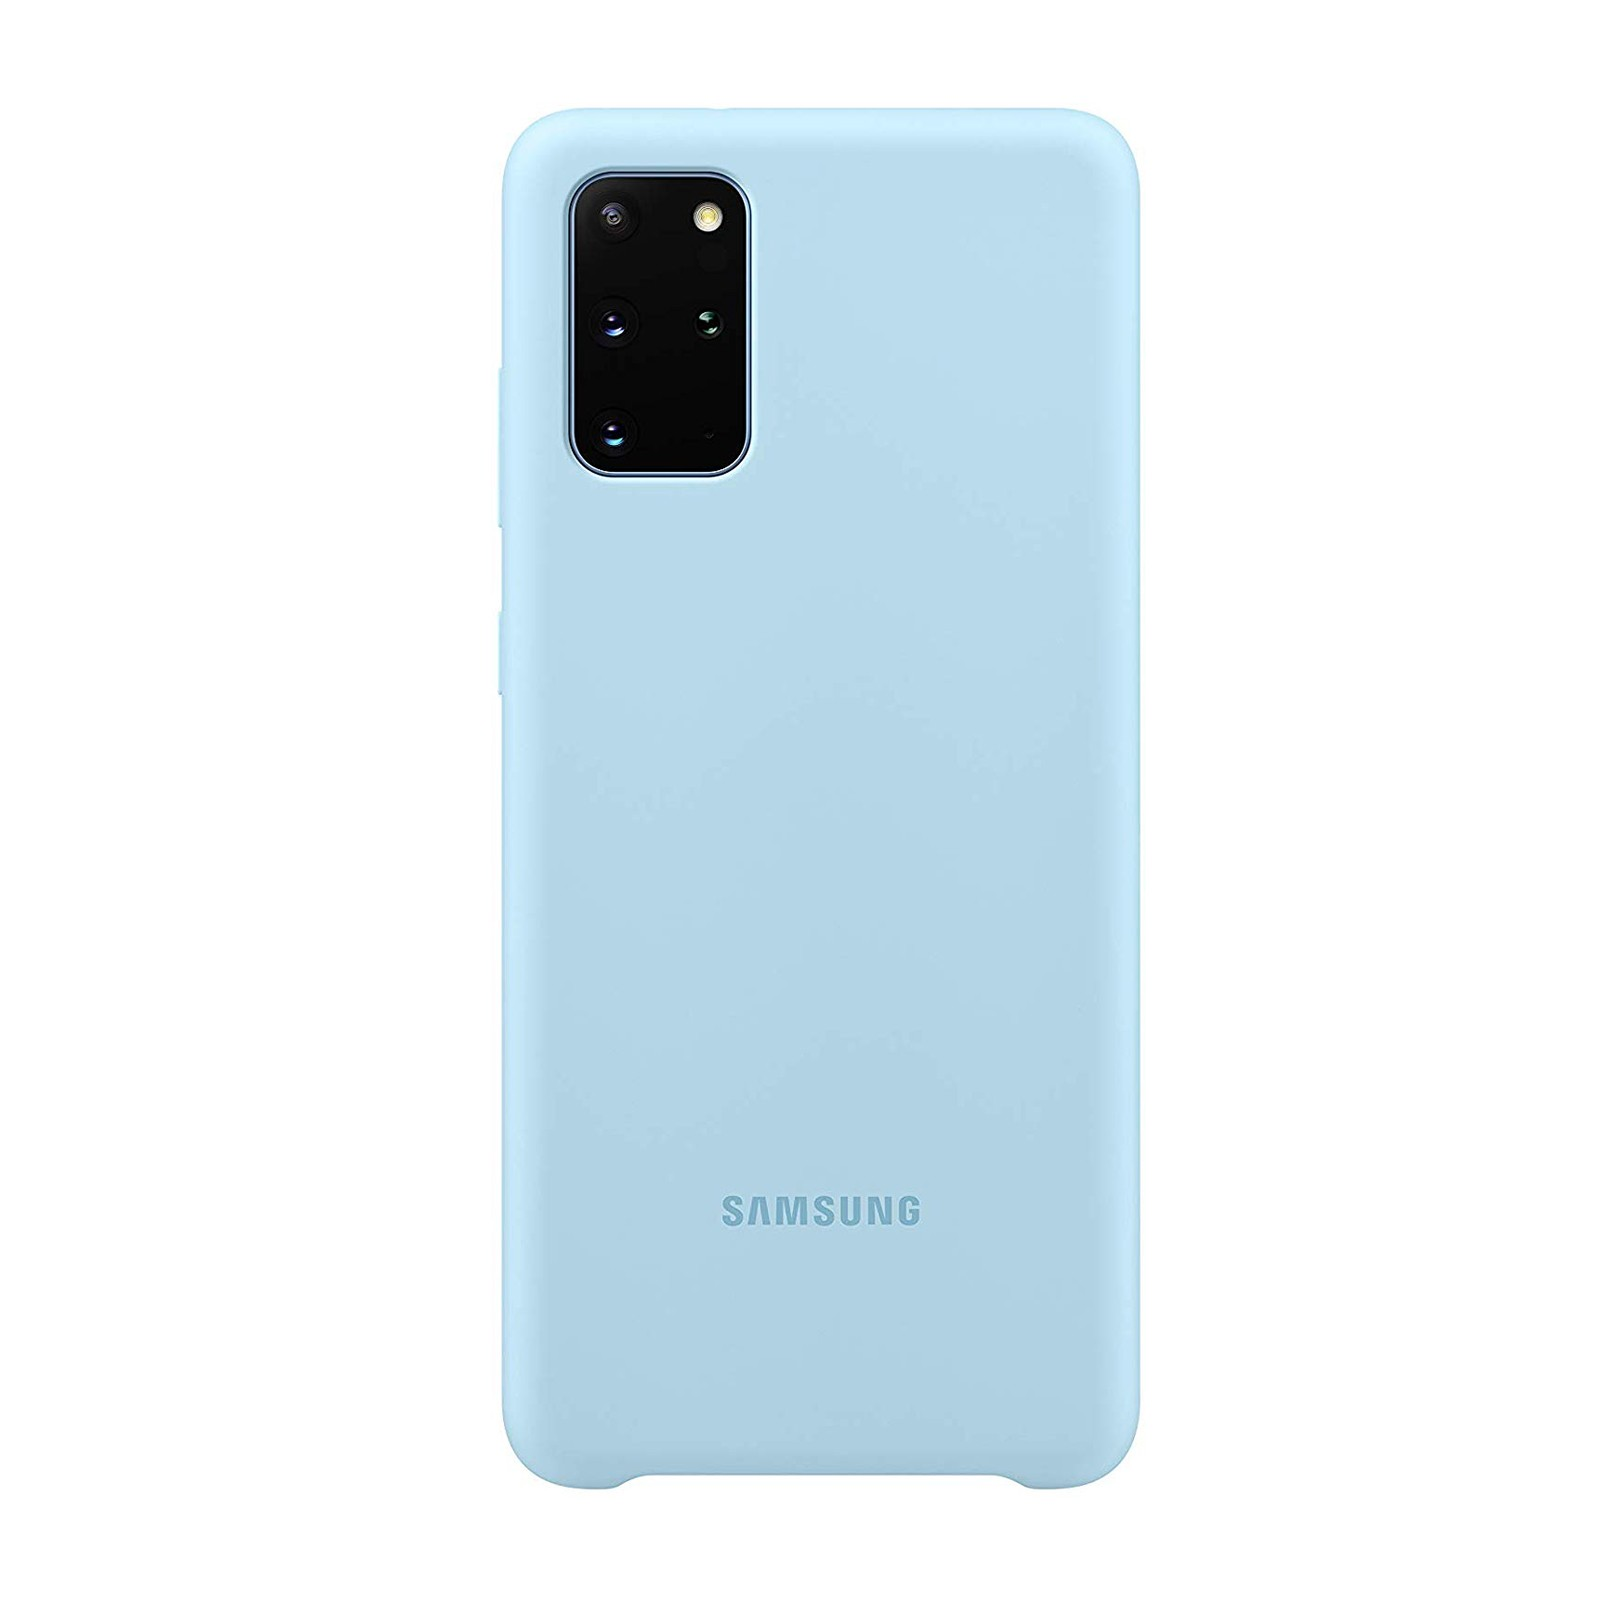 Galaxy Backcover, BLUE, Blue Samsung, COVER S20+, EF-PG985 Sky SKY GALAXY SILICONE SAMSUNG S20+